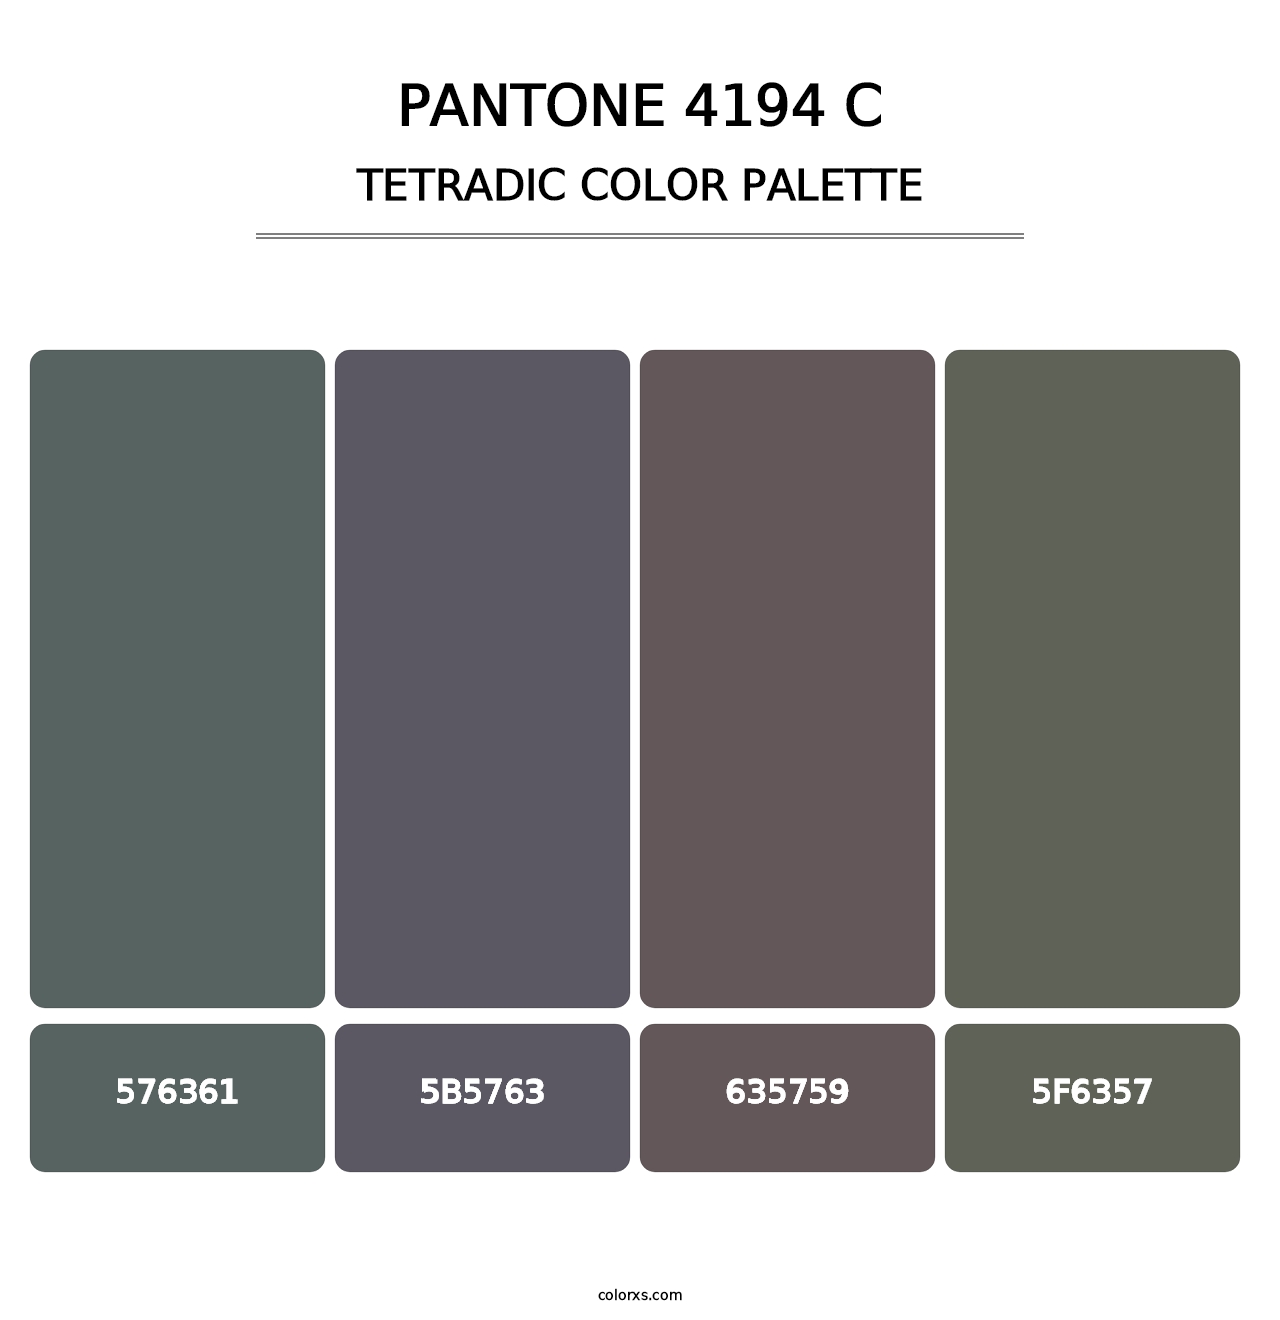 PANTONE 4194 C - Tetradic Color Palette